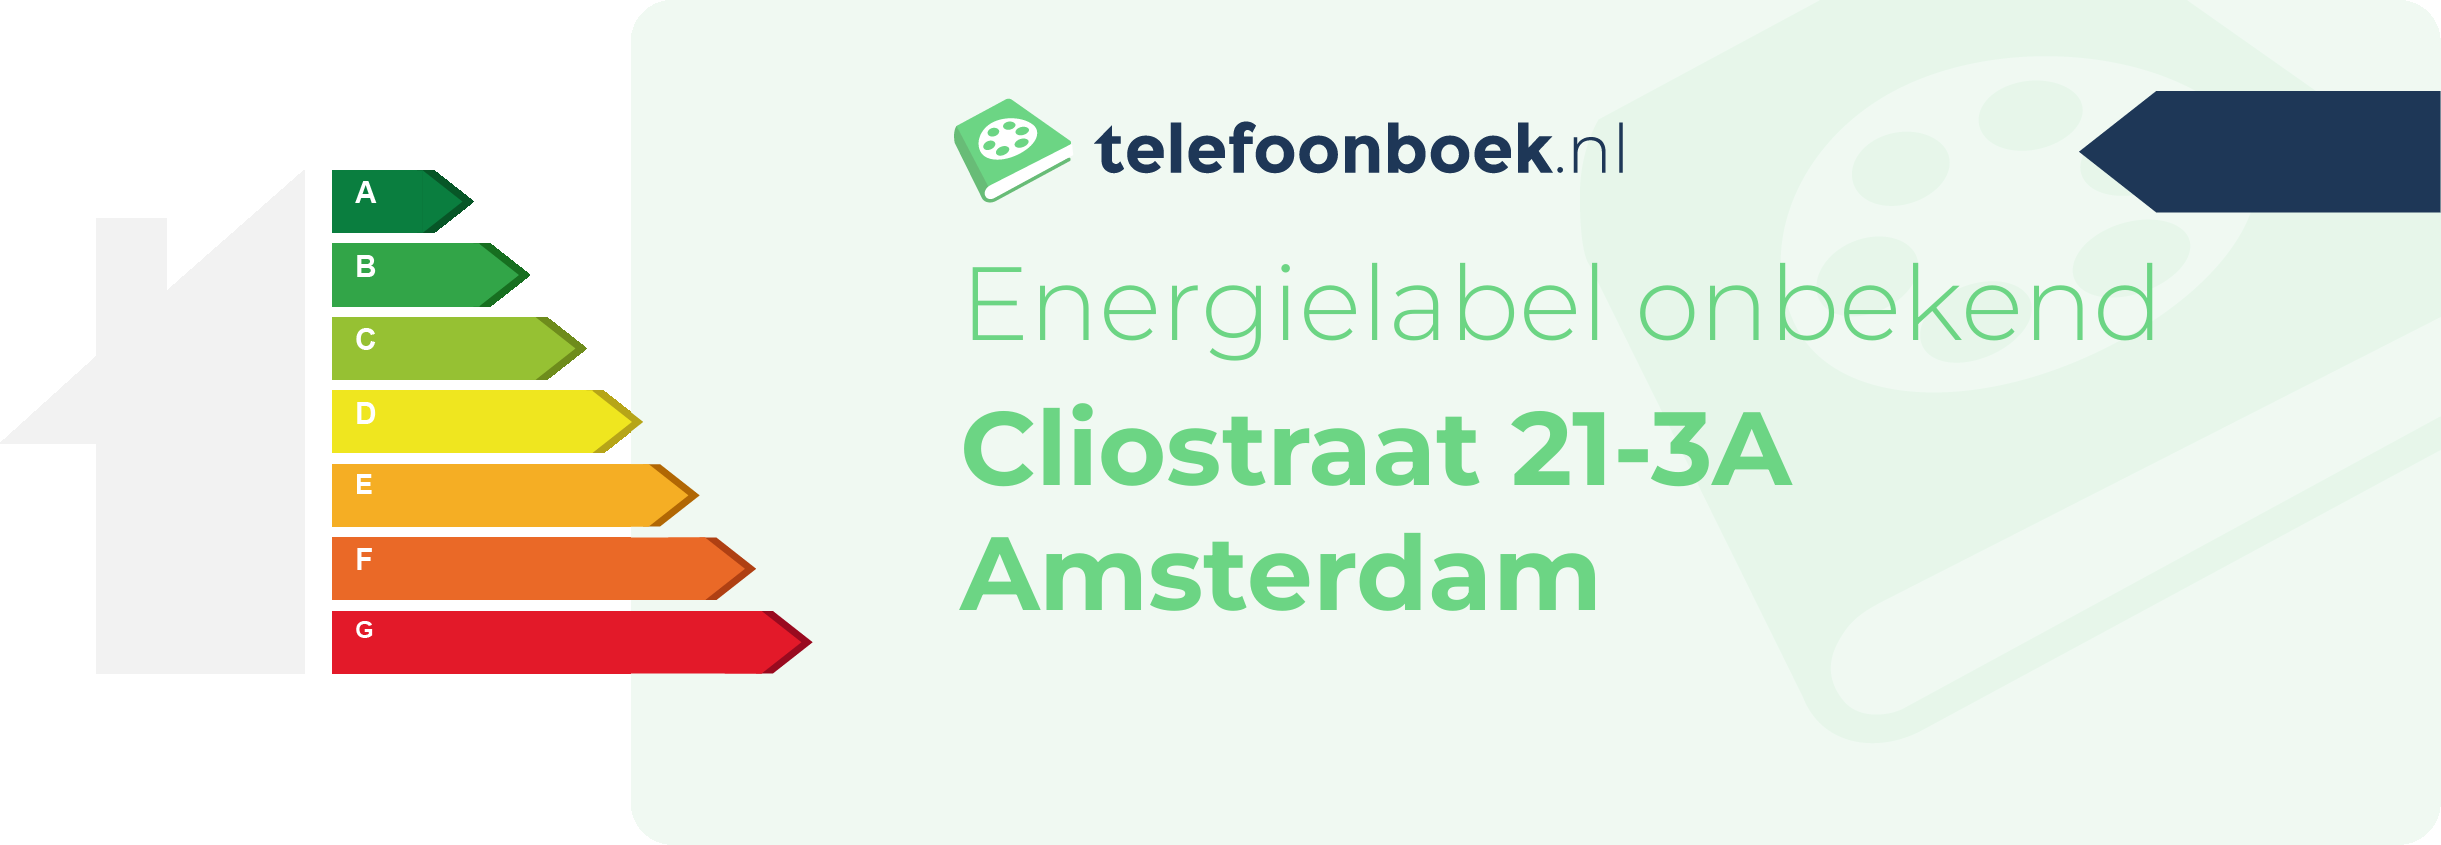 Energielabel Cliostraat 21-3A Amsterdam